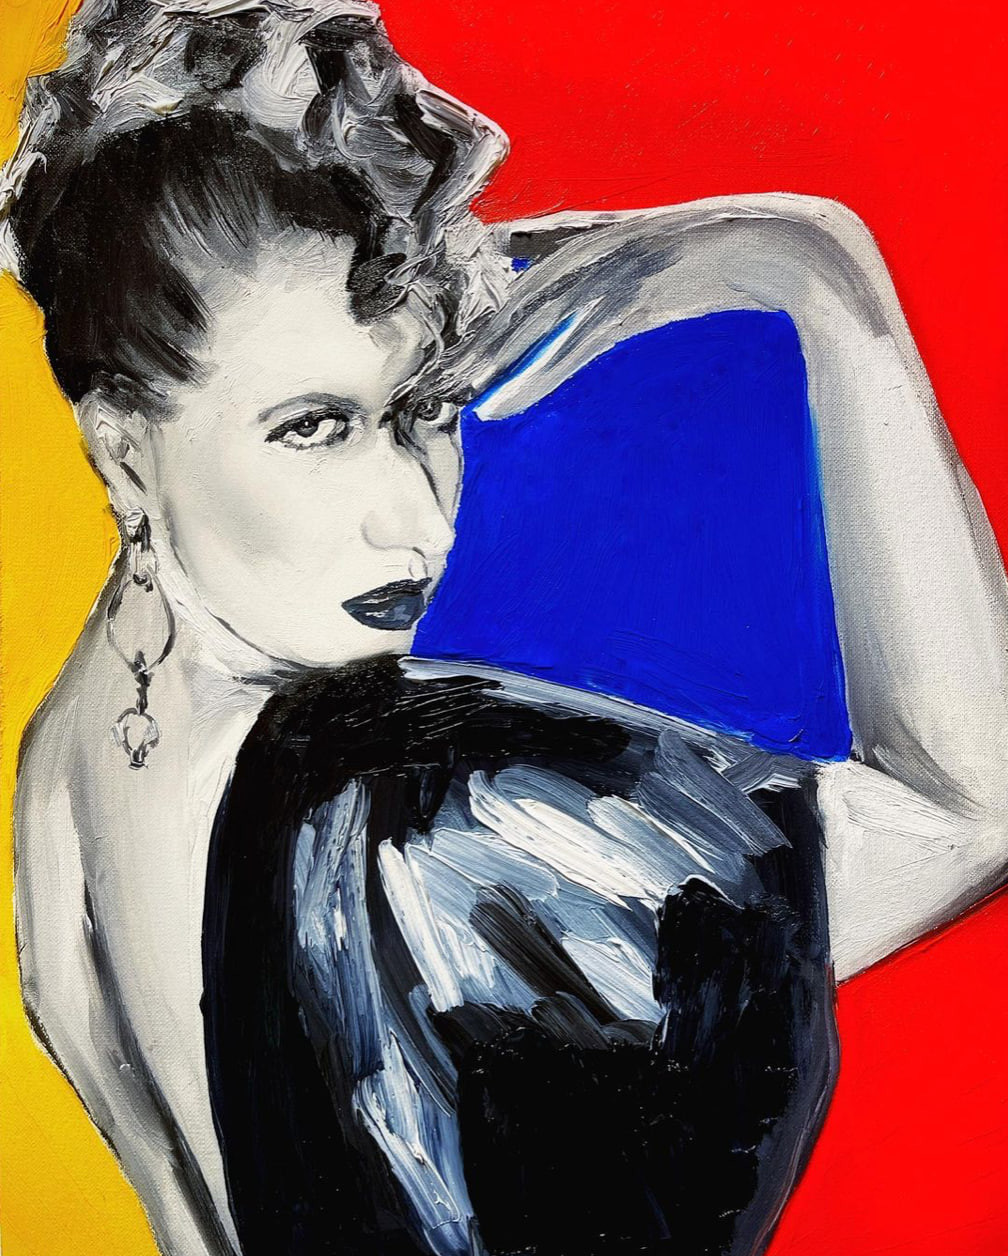 Julia Khishchenko, “Colorblocked vol 5”, oil on canvas, 30×40 cm, 2021